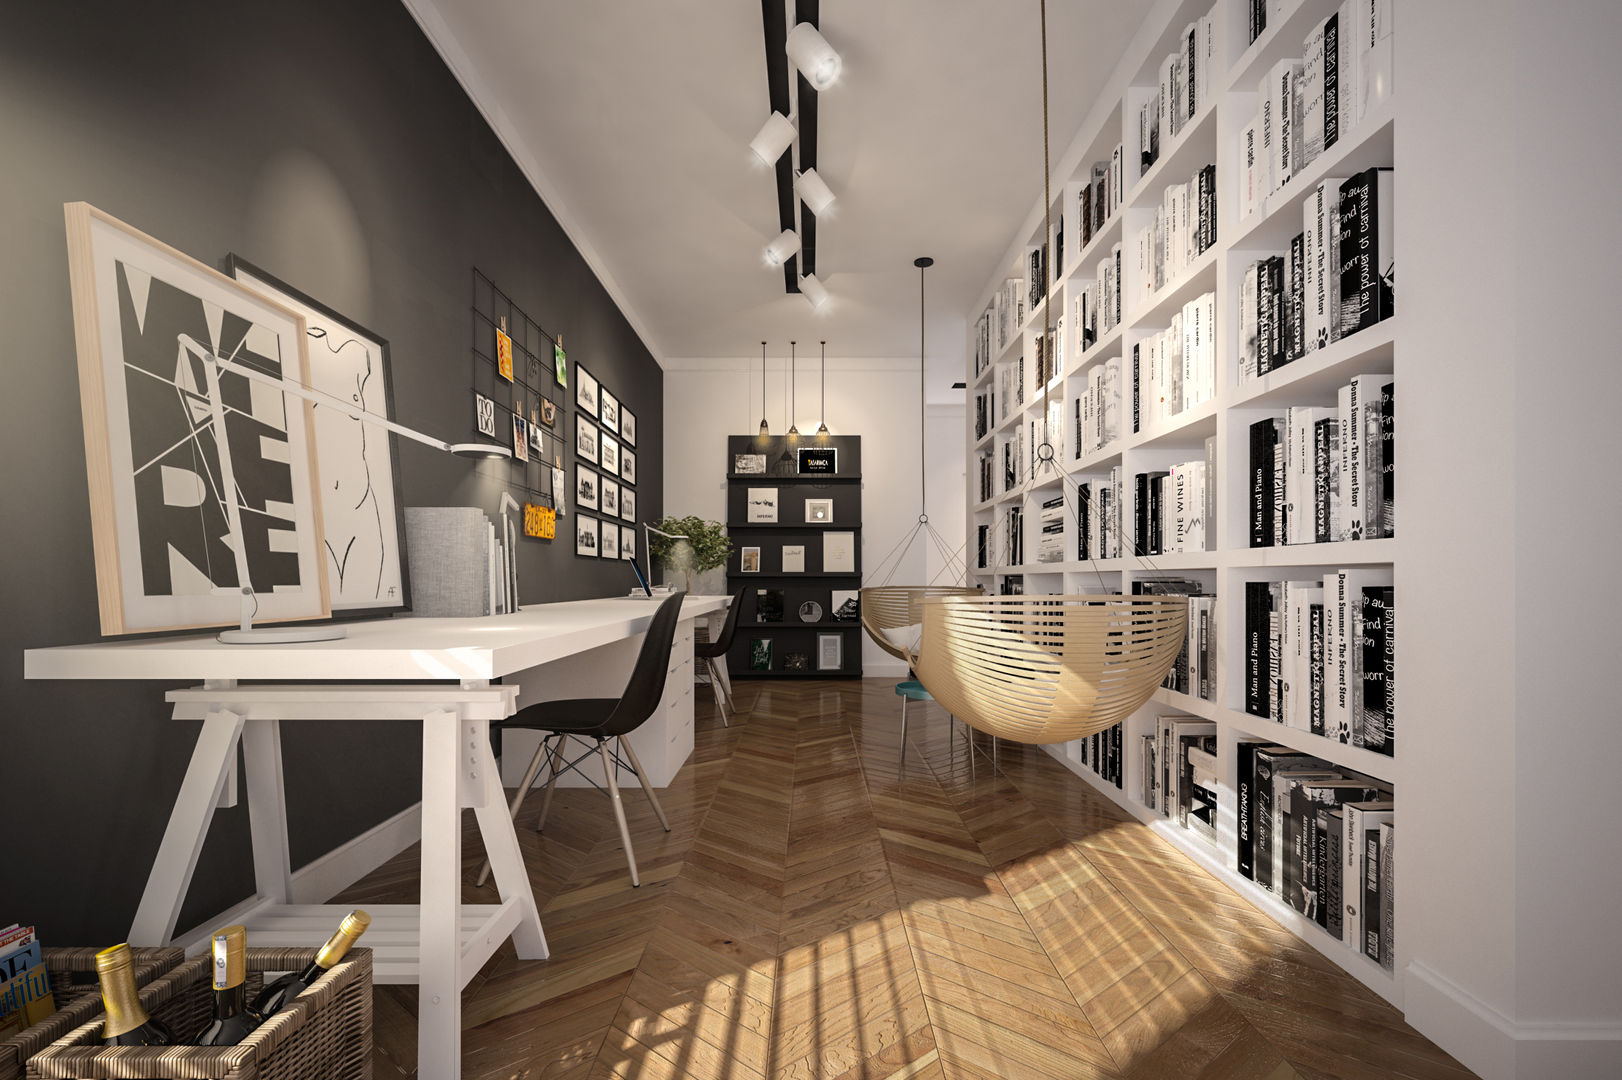 D HOUSE, Tasarımca Desıgn Offıce Tasarımca Desıgn Offıce Oficinas y bibliotecas de estilo moderno